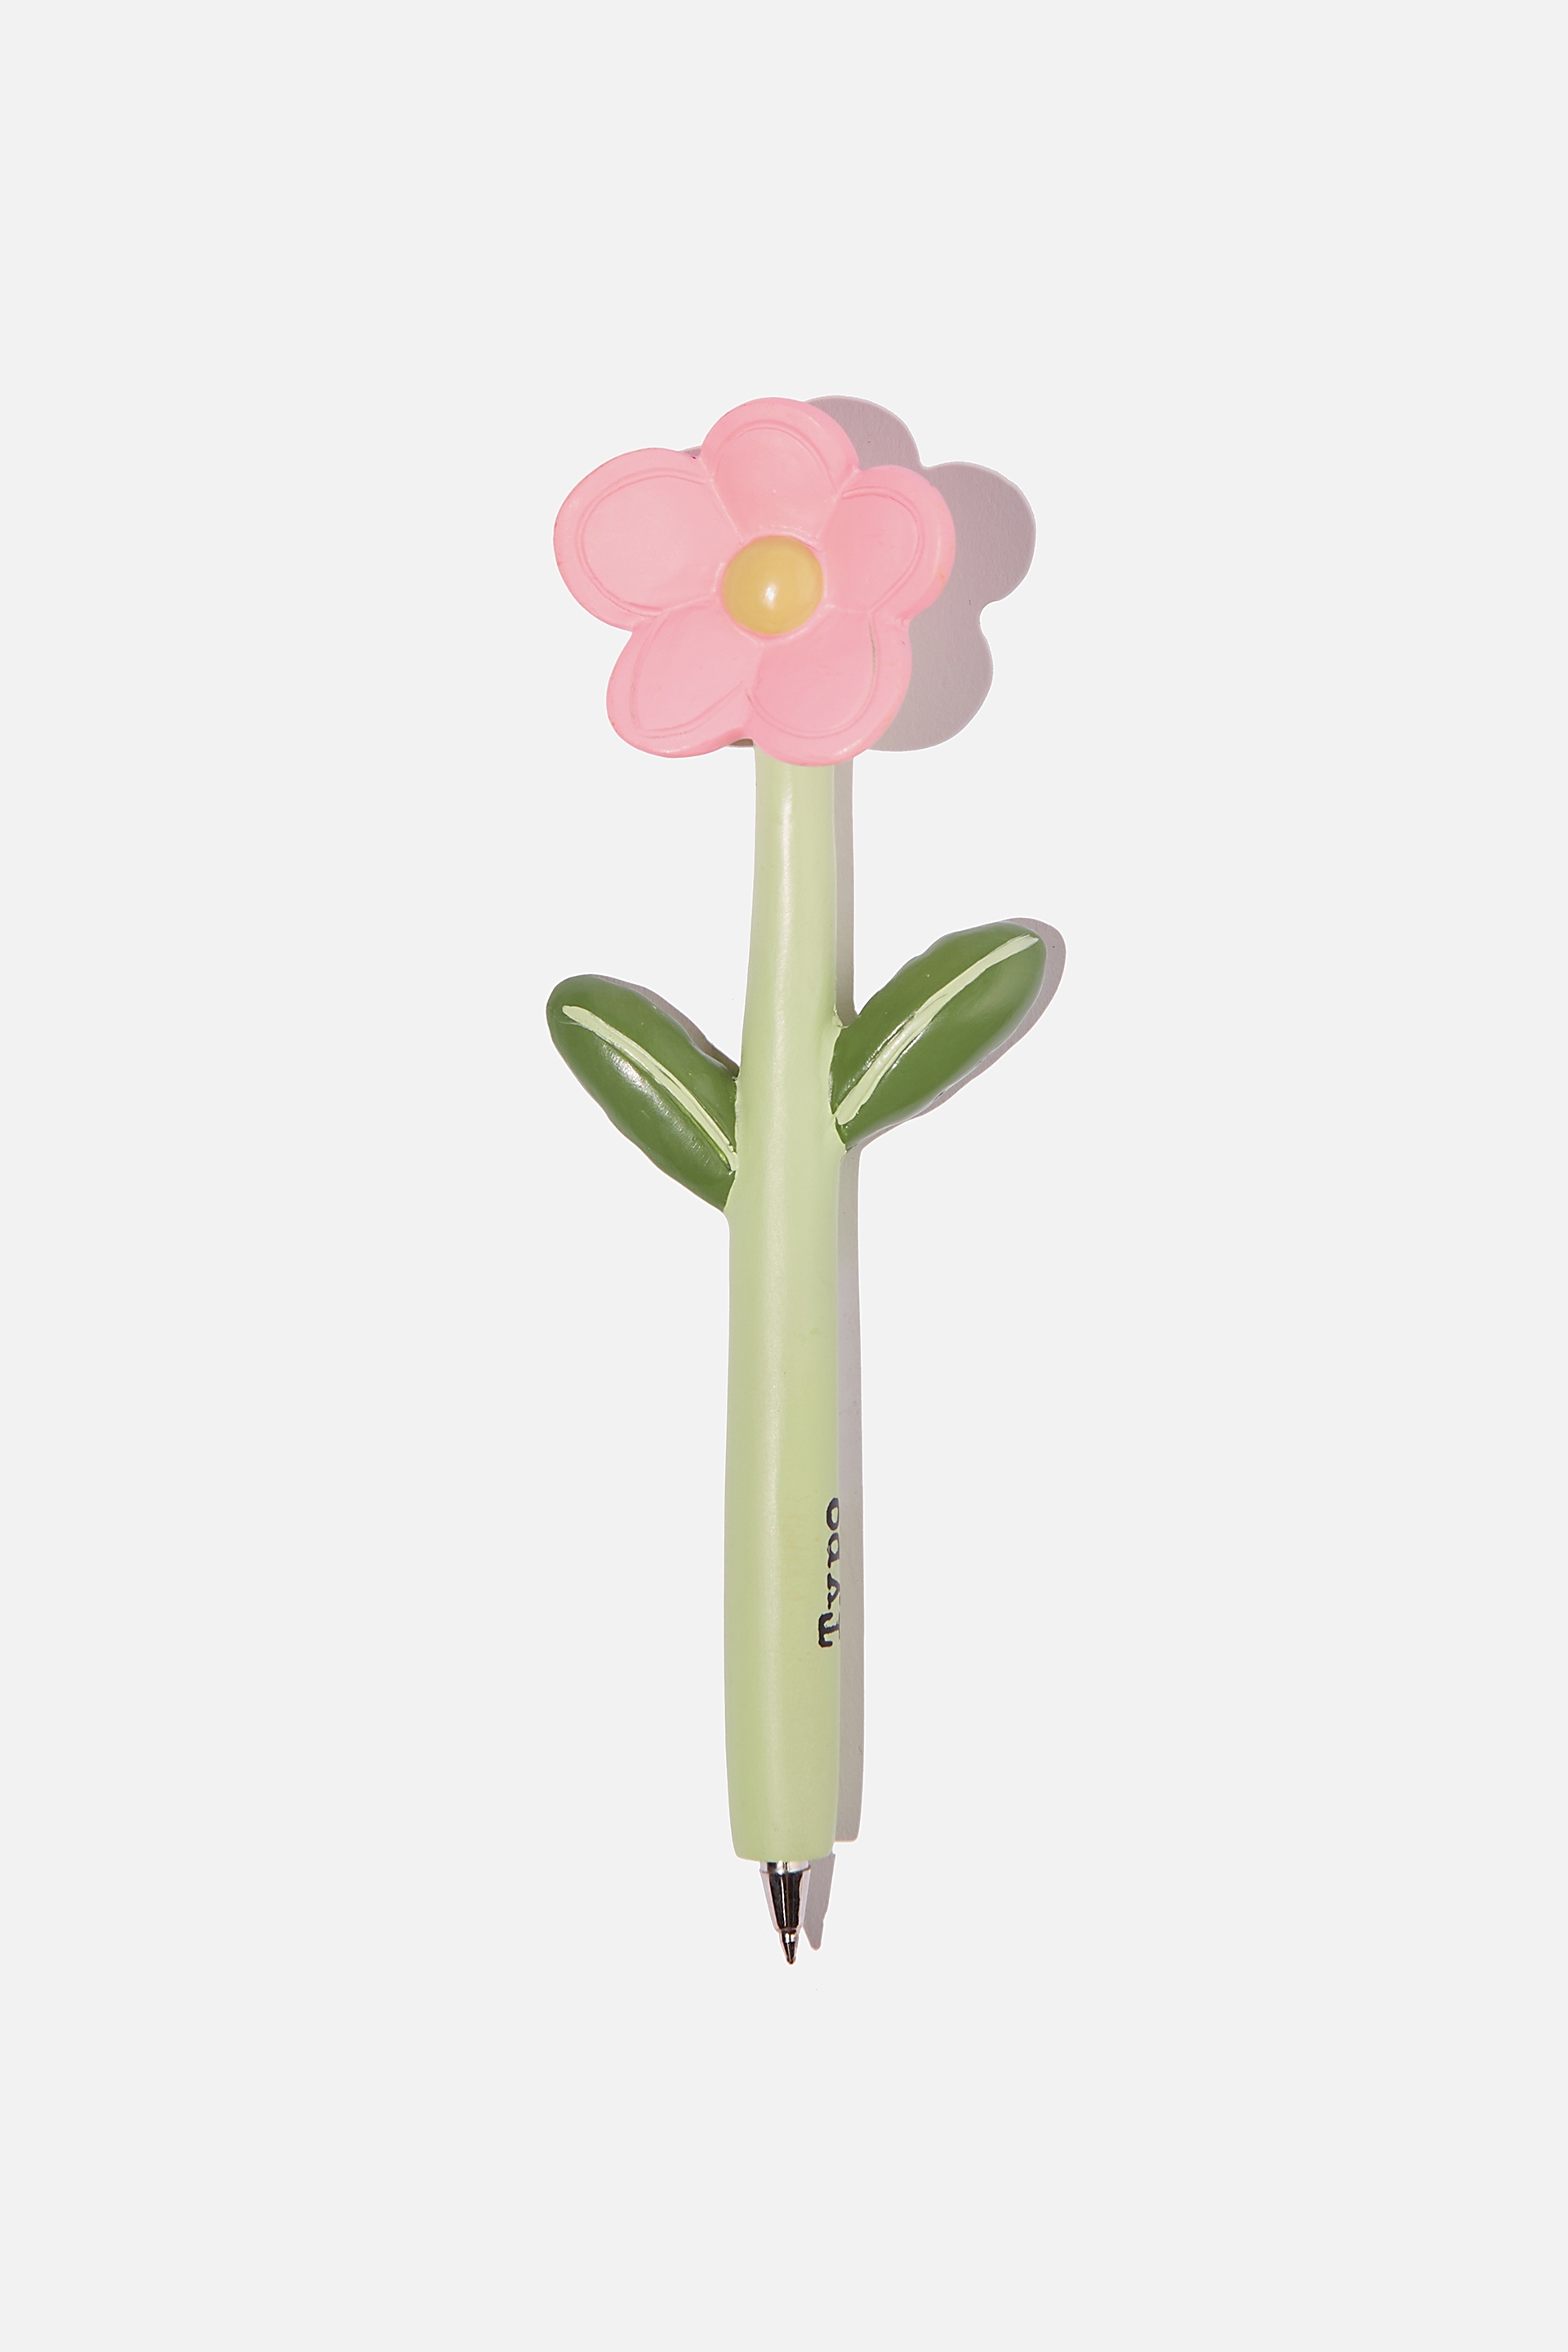 Typo - The Novelty Pen - Minimalist daisy